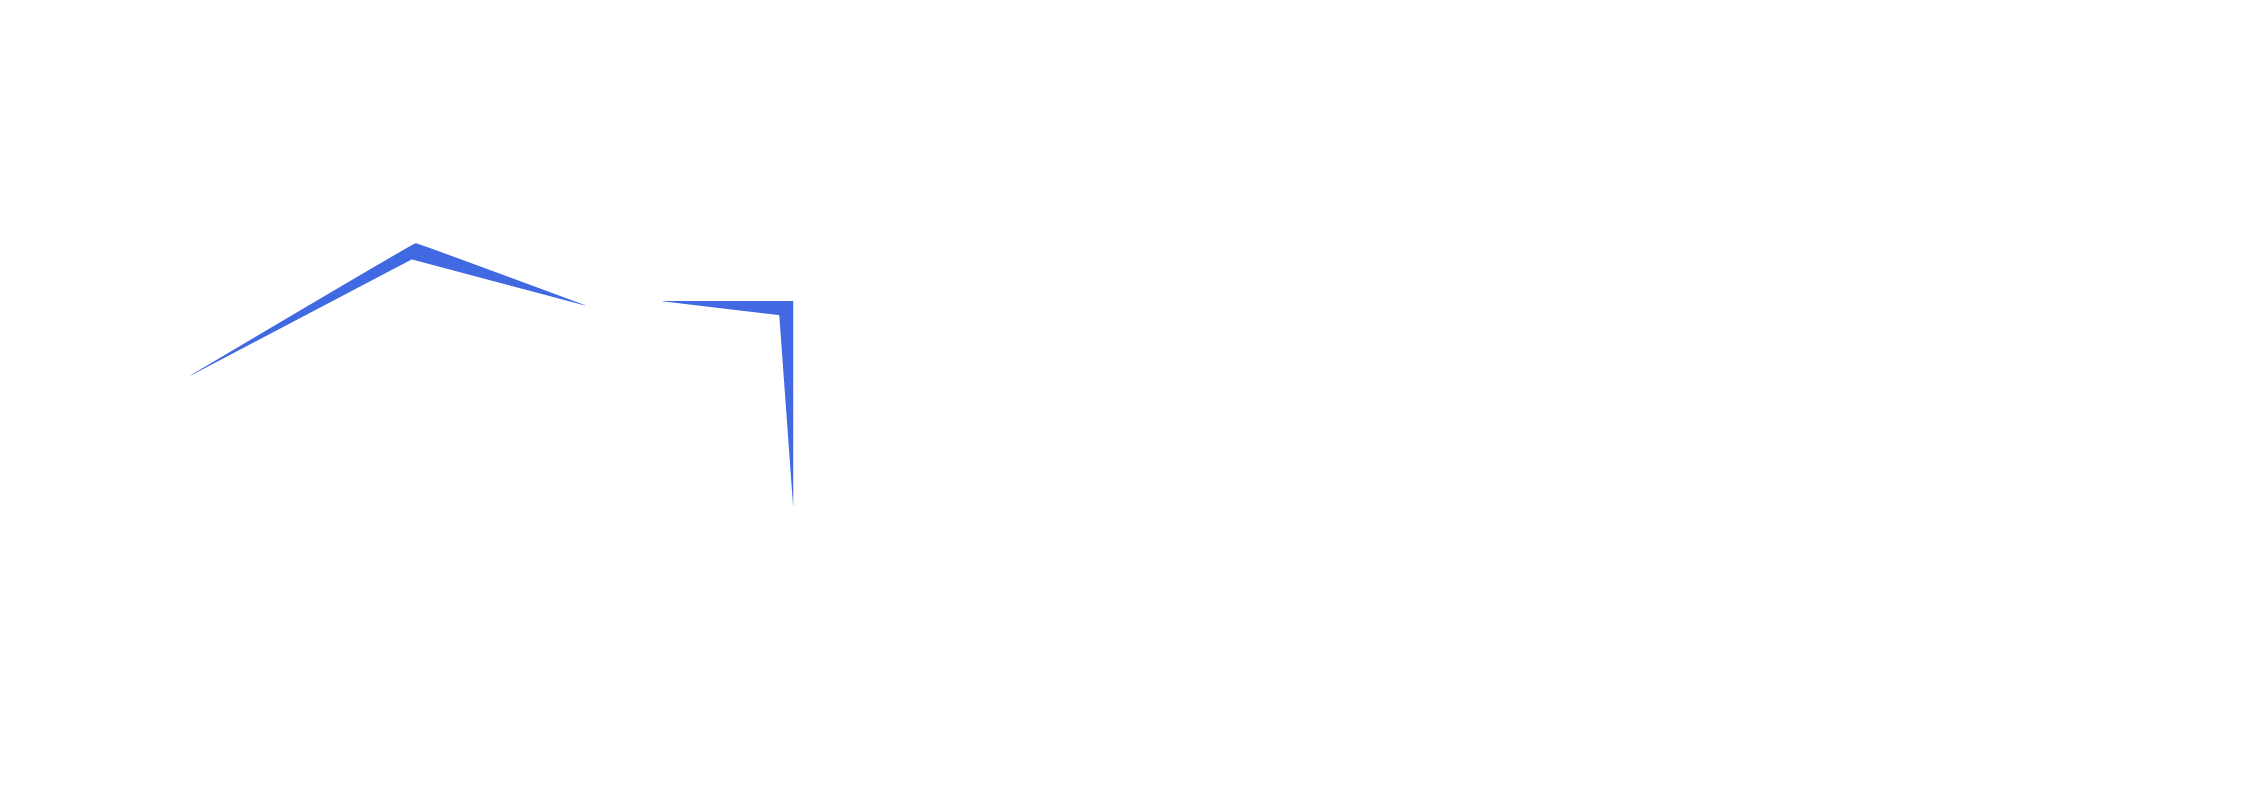 Expert Logo Design Company in USA